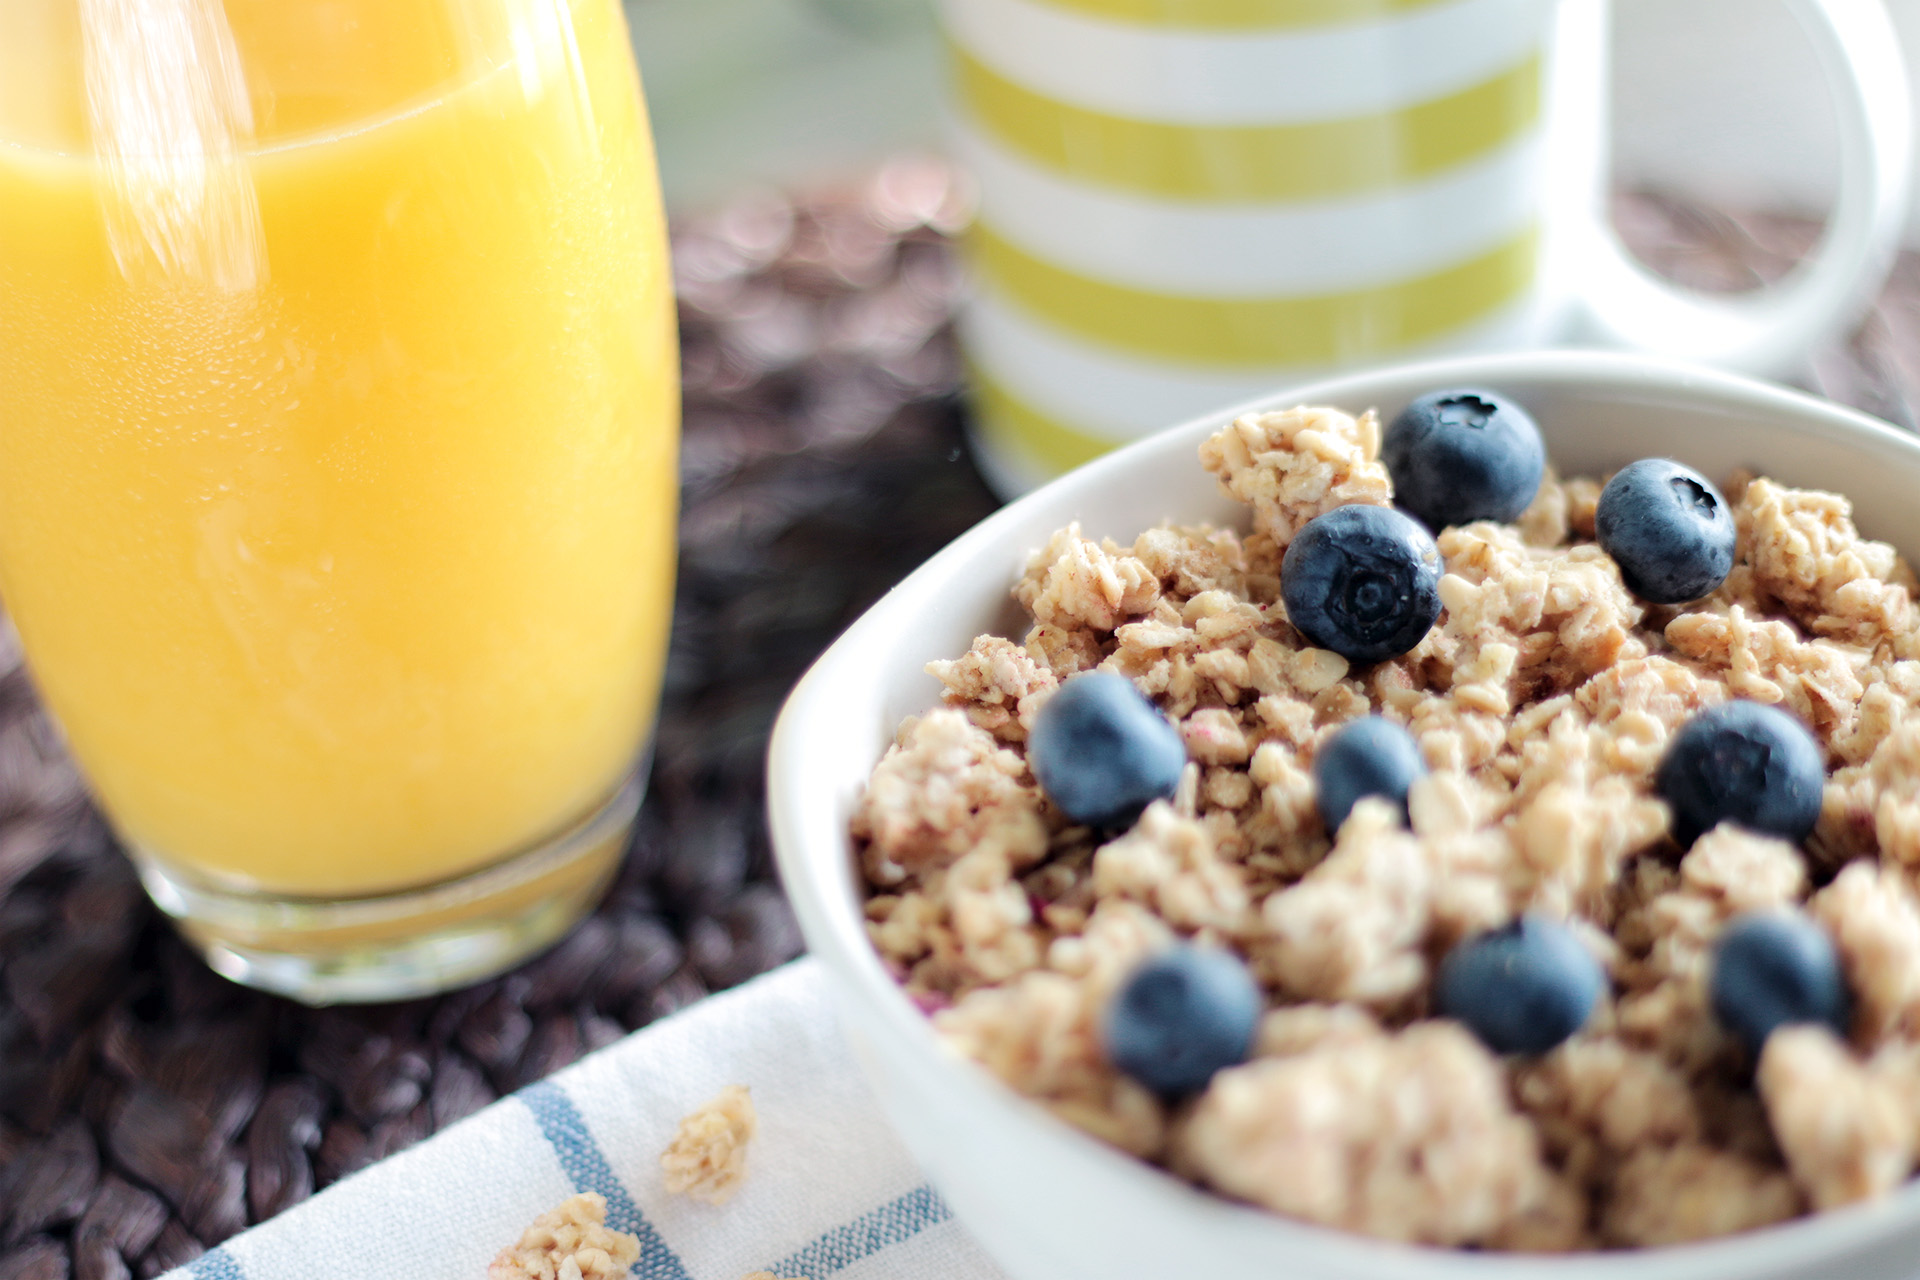 Pre run breakfast - fruit juice, cereal, berries, yoghurt